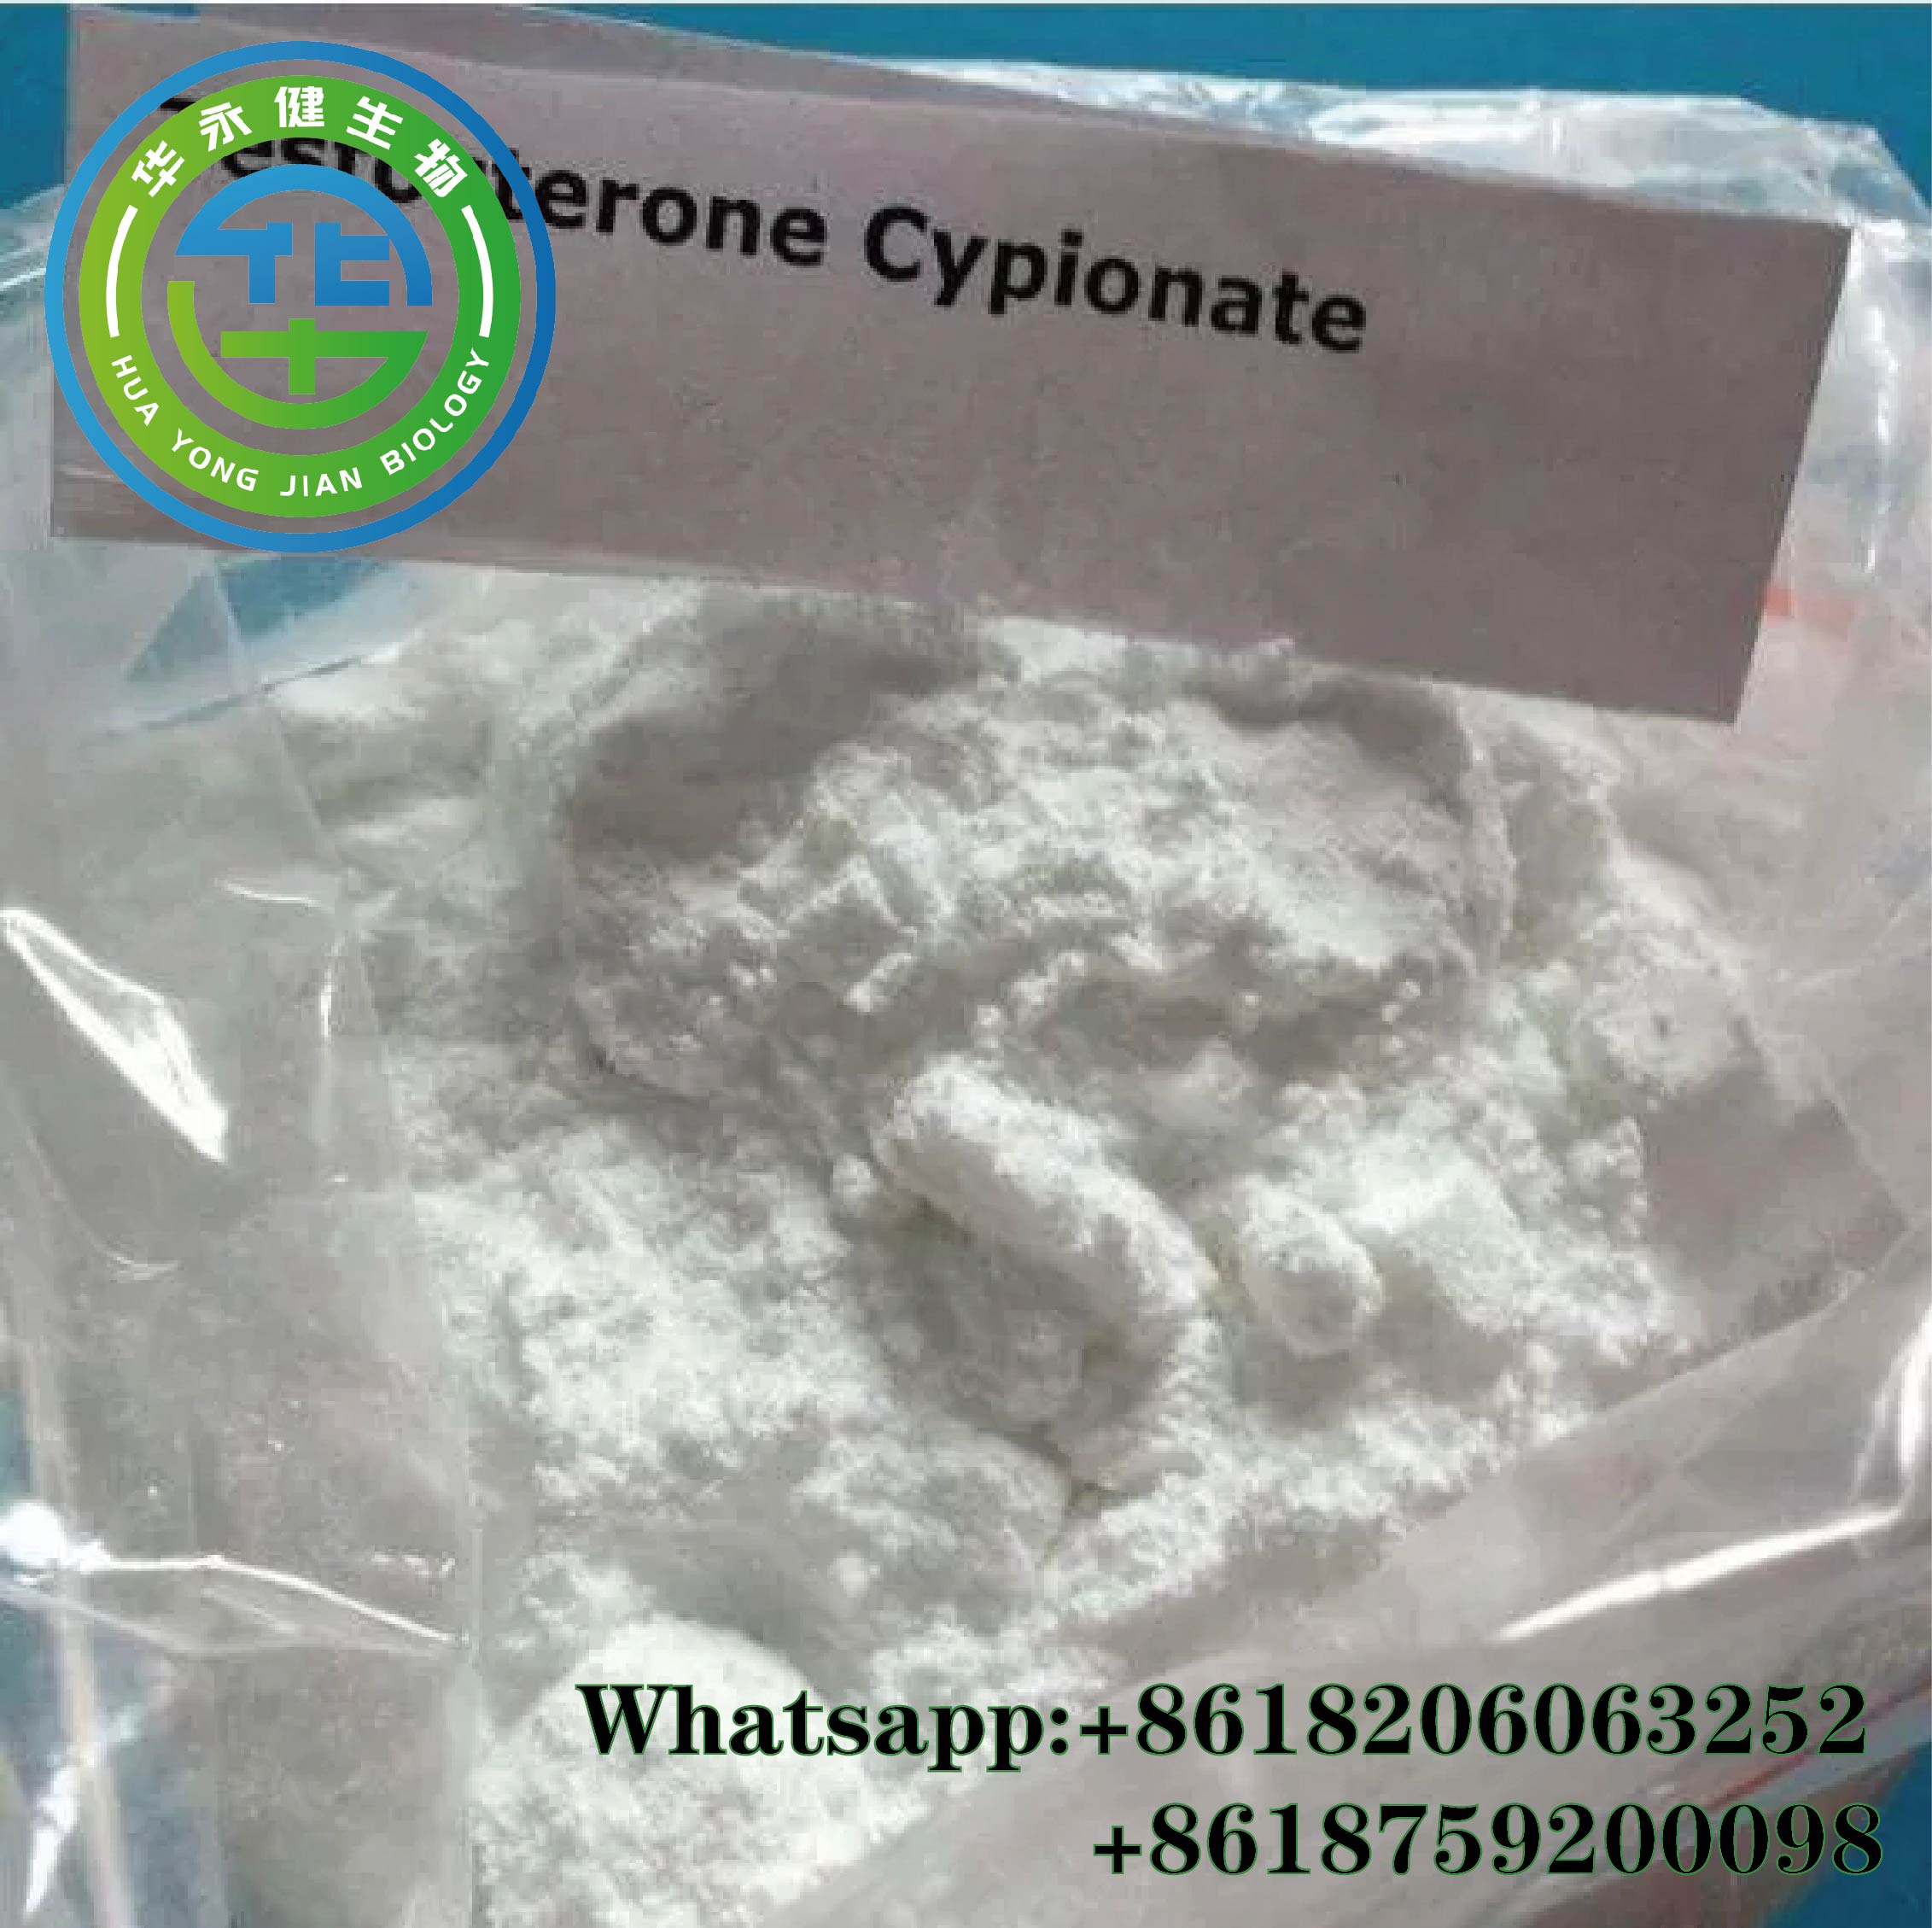 Testosterone Test C Raw Steroid White Powder Testosterone Cypionate CAS 58-20-8  For Body Building